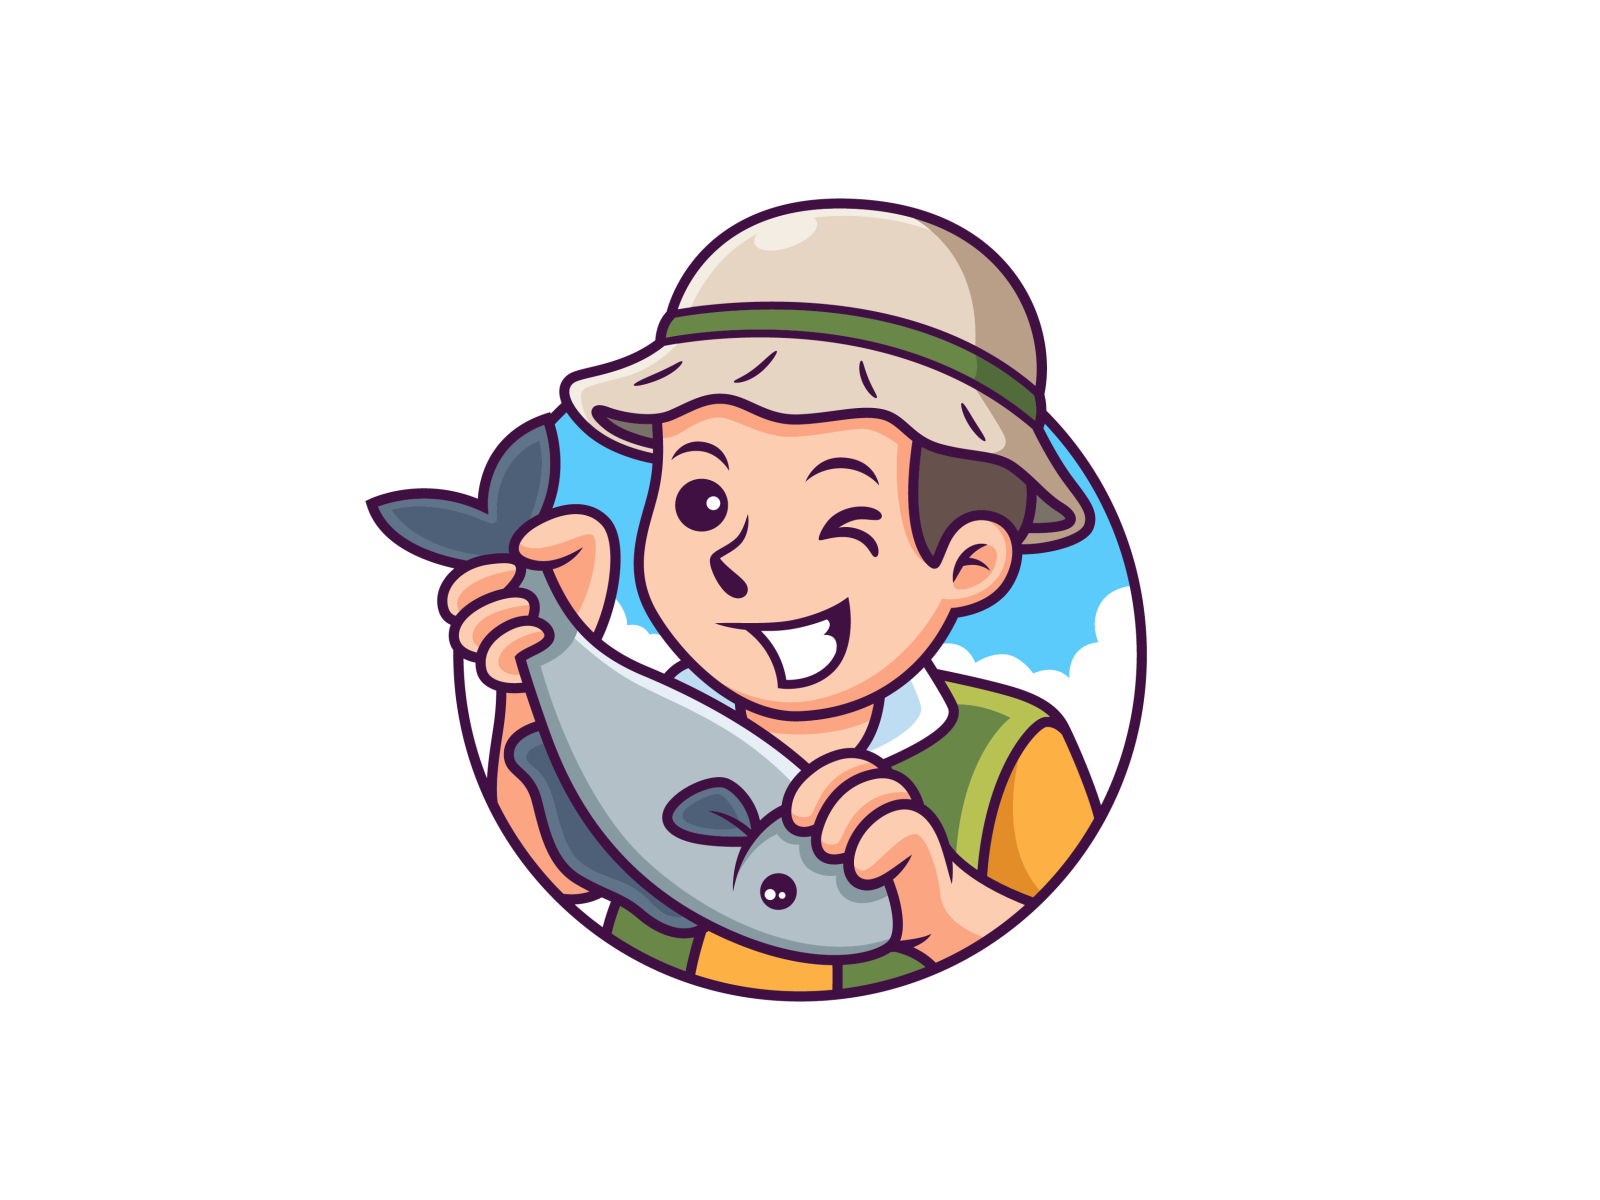 Fisherman Cartoon by mex.design on Dribbble